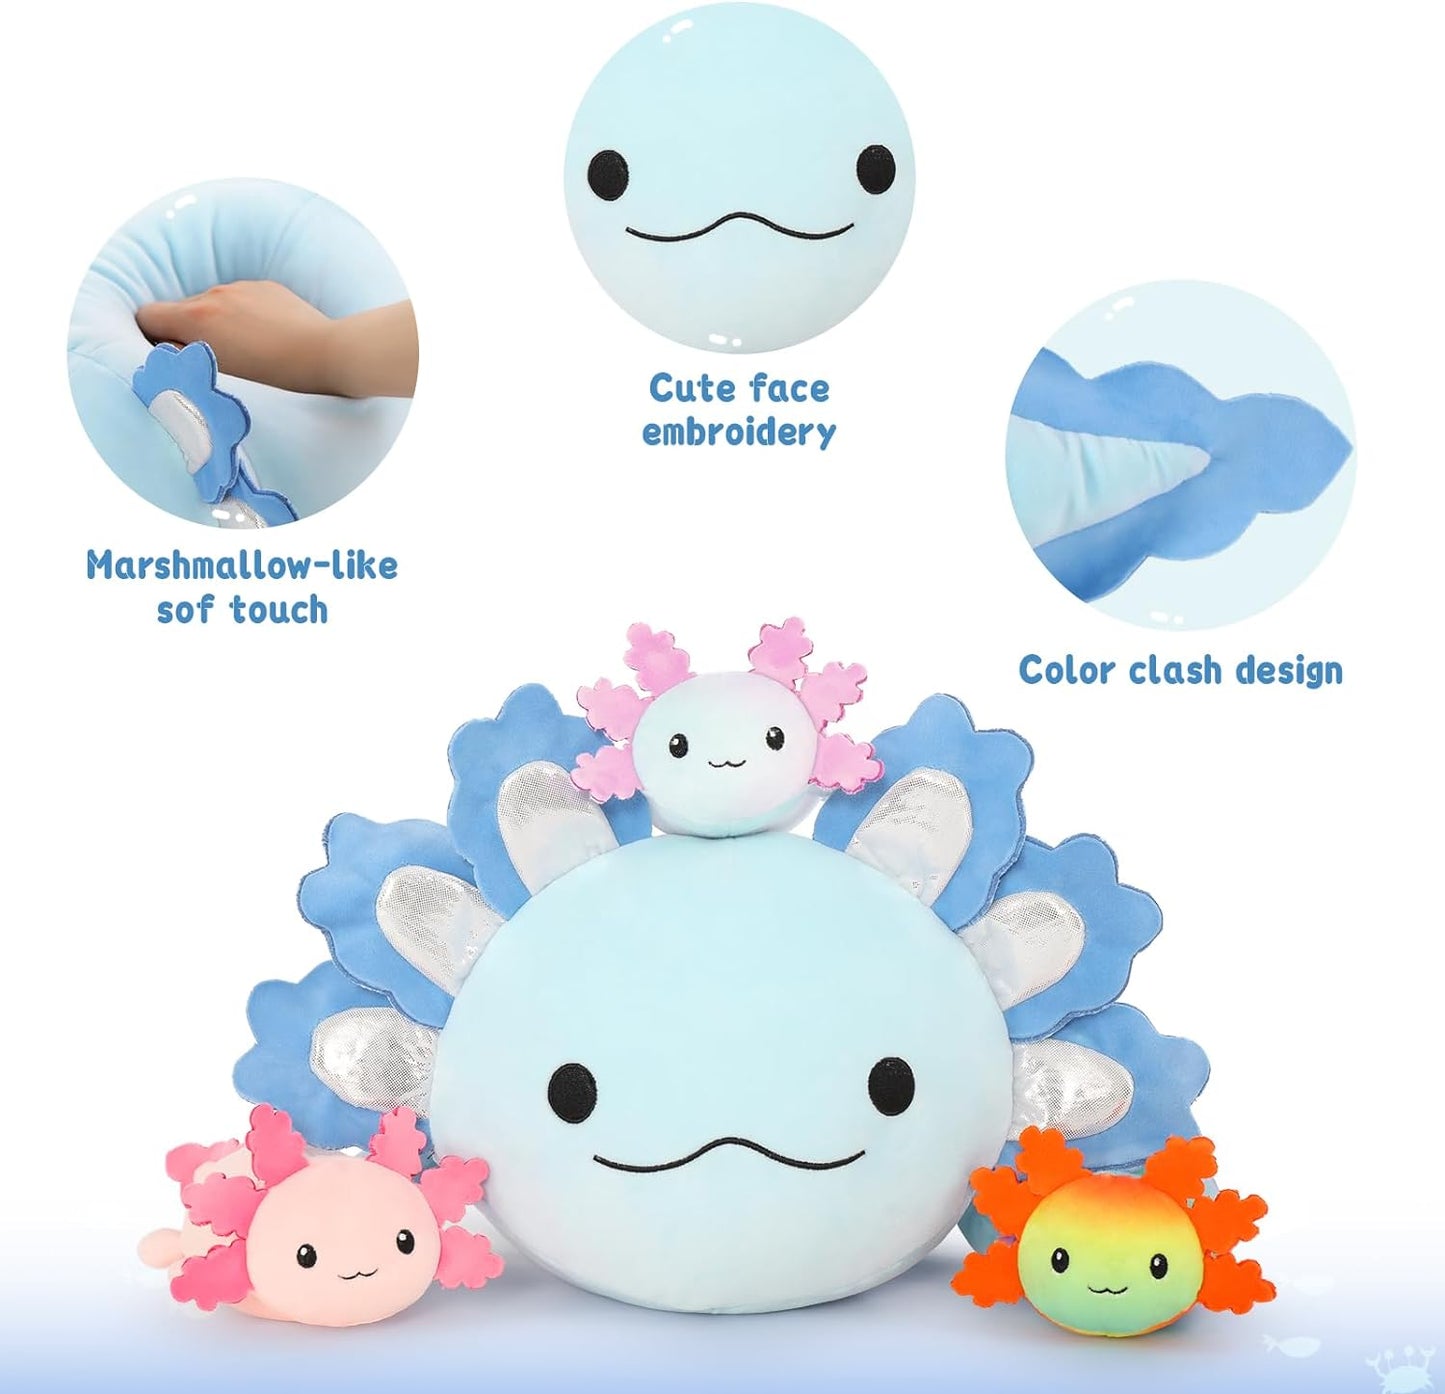 Axolotl Plush Toys, Blue, 23.5 Inches - MorisMos Stuffed Animals